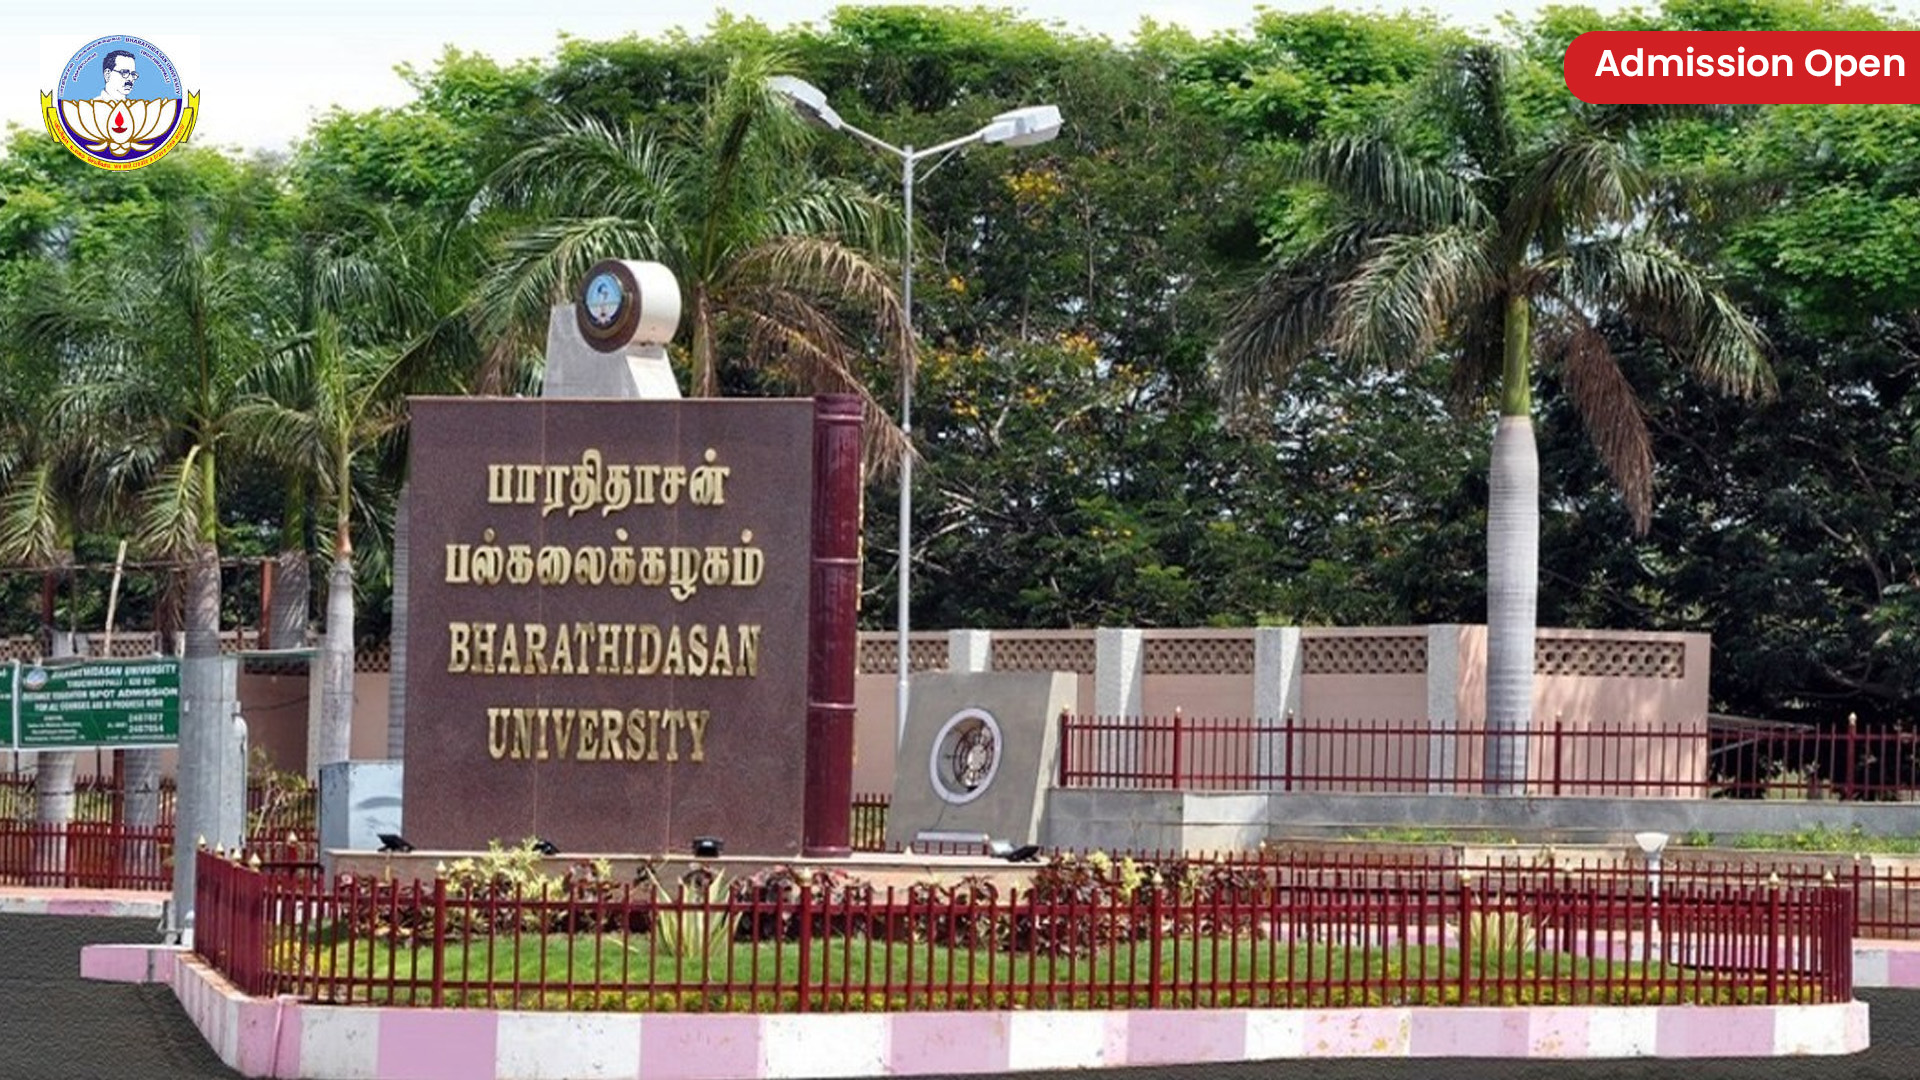 Bharthisdasan University